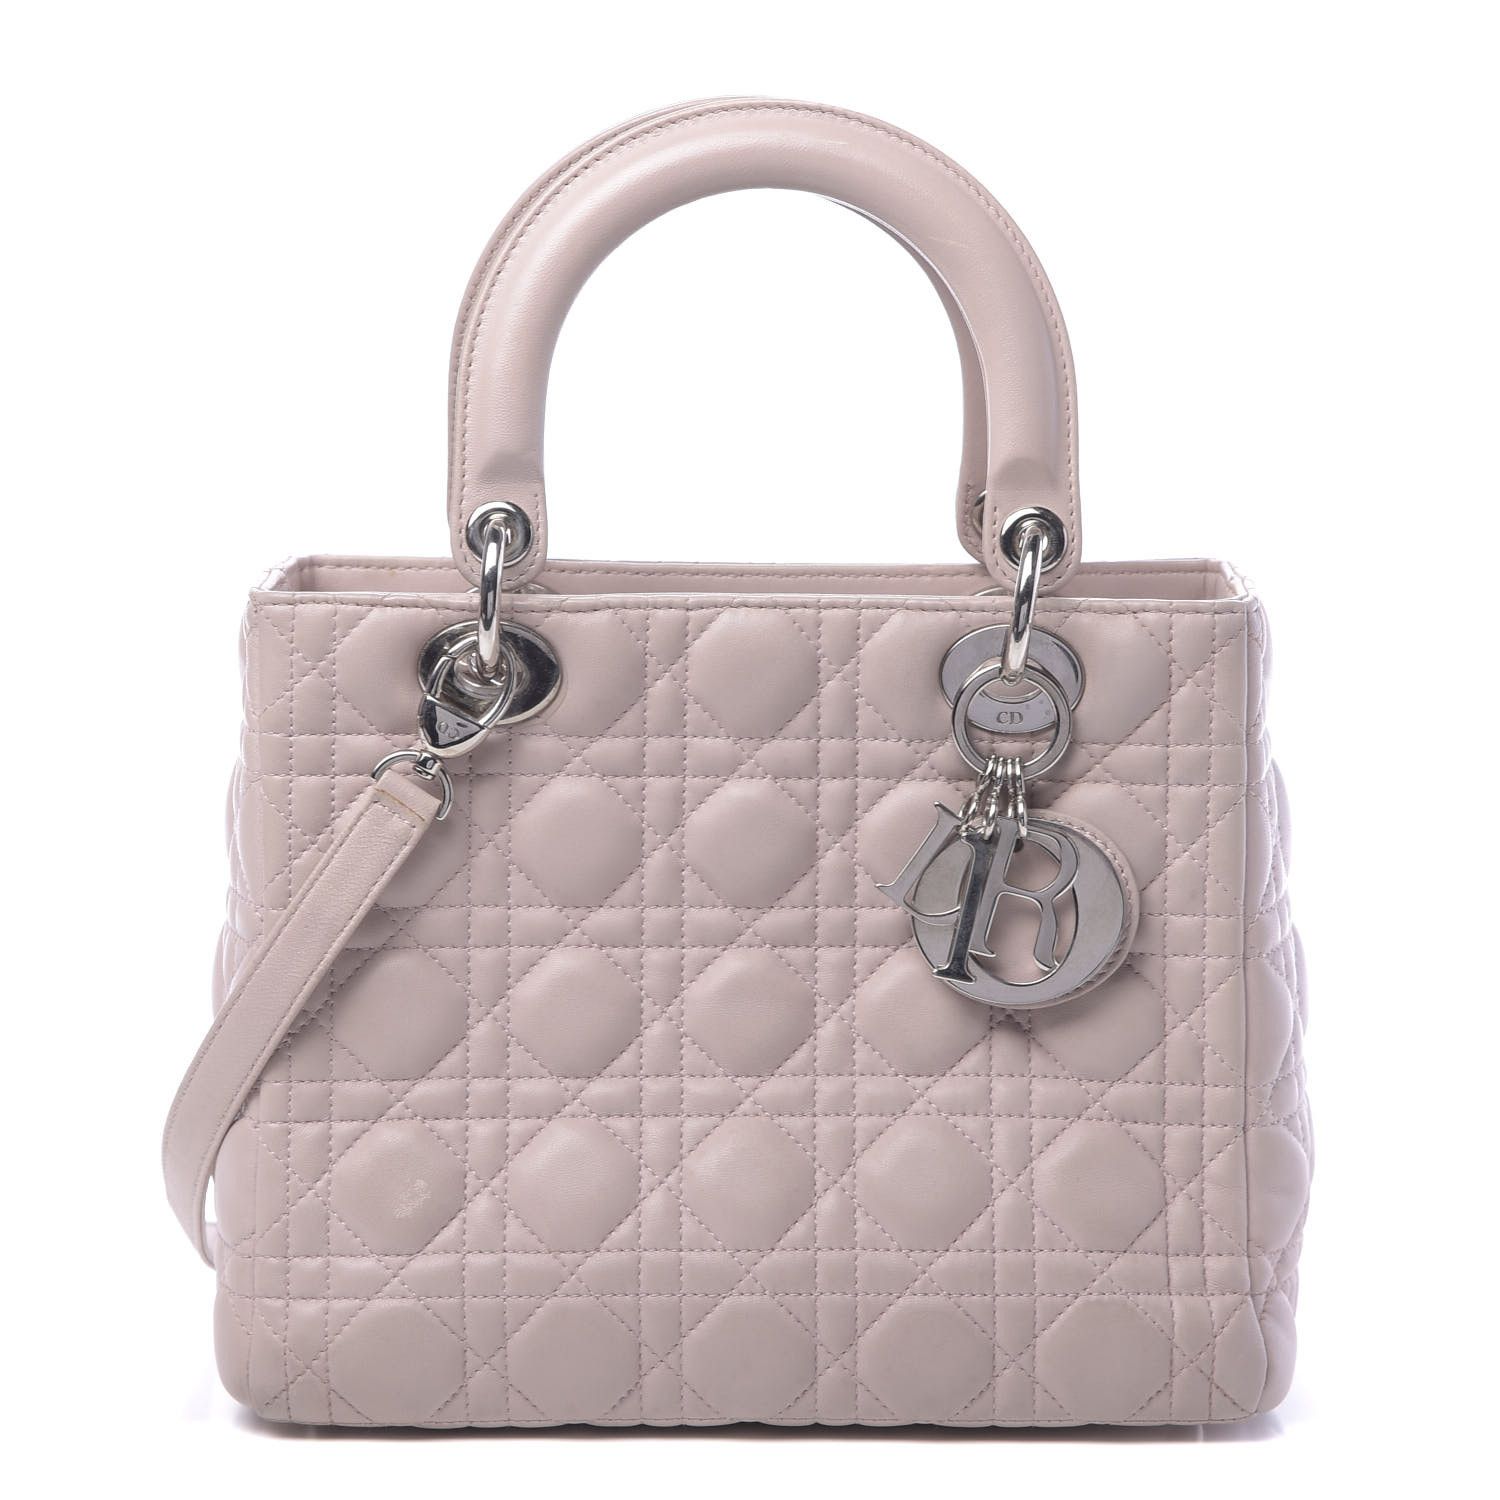 Lambskin Cannage Medium Lady Dior Light Pink | Fashionphile